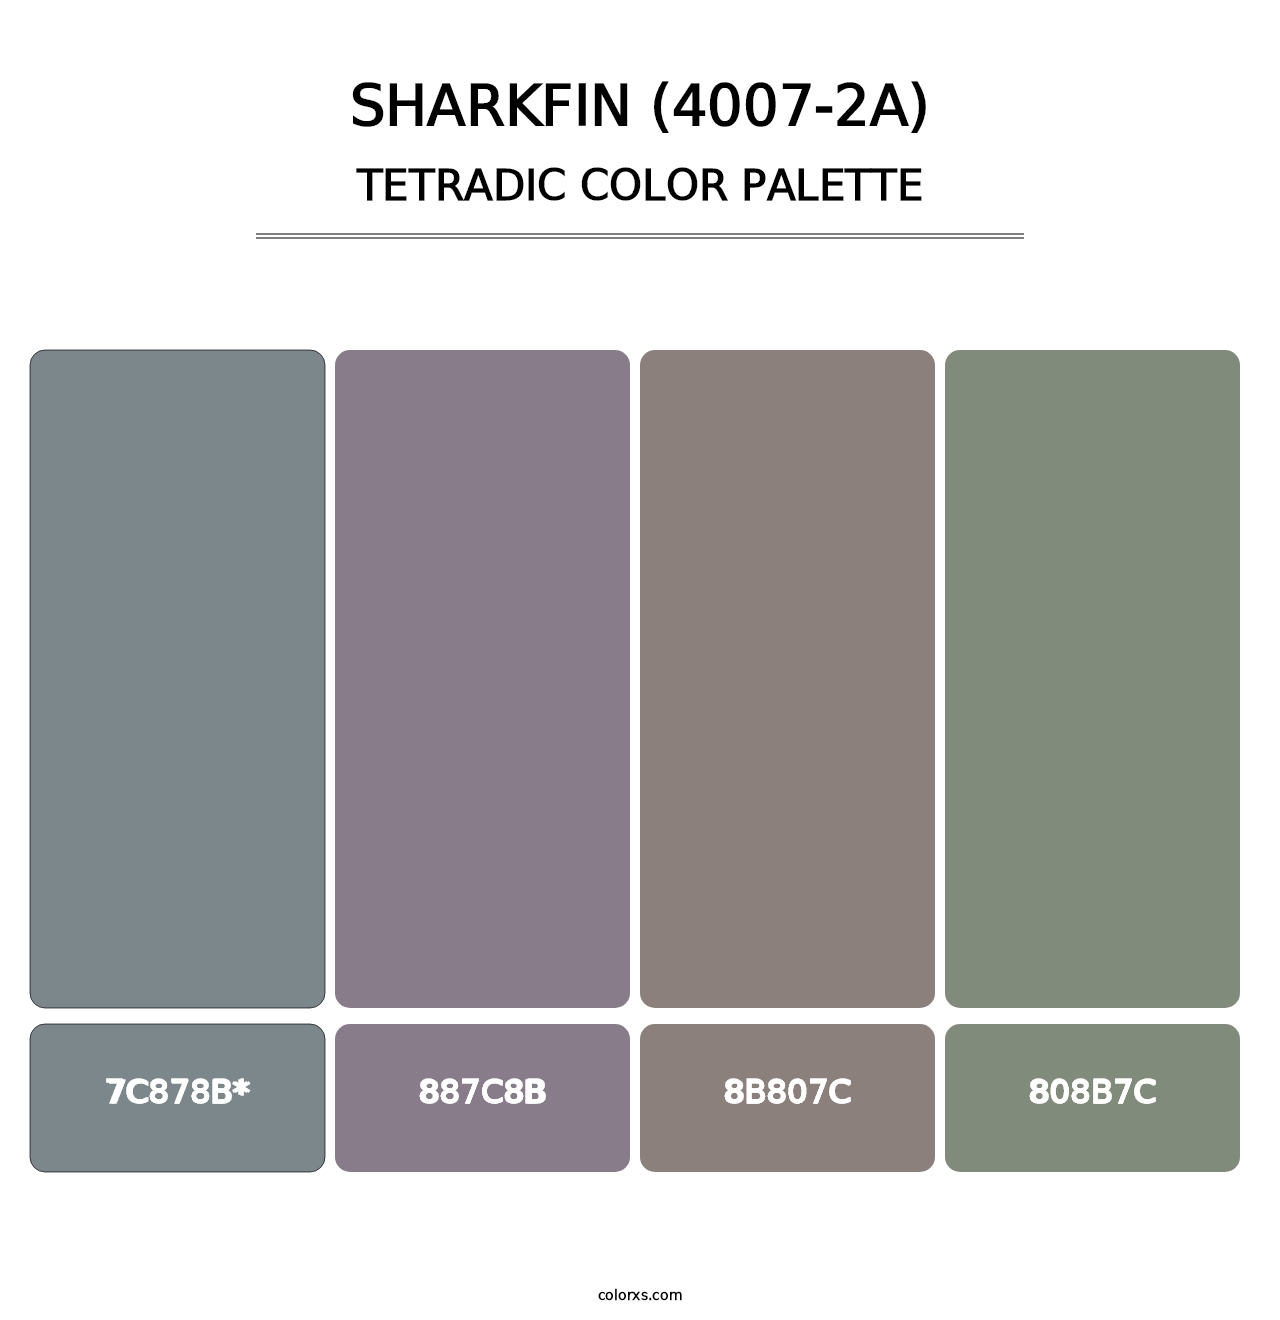 Sharkfin (4007-2A) - Tetradic Color Palette